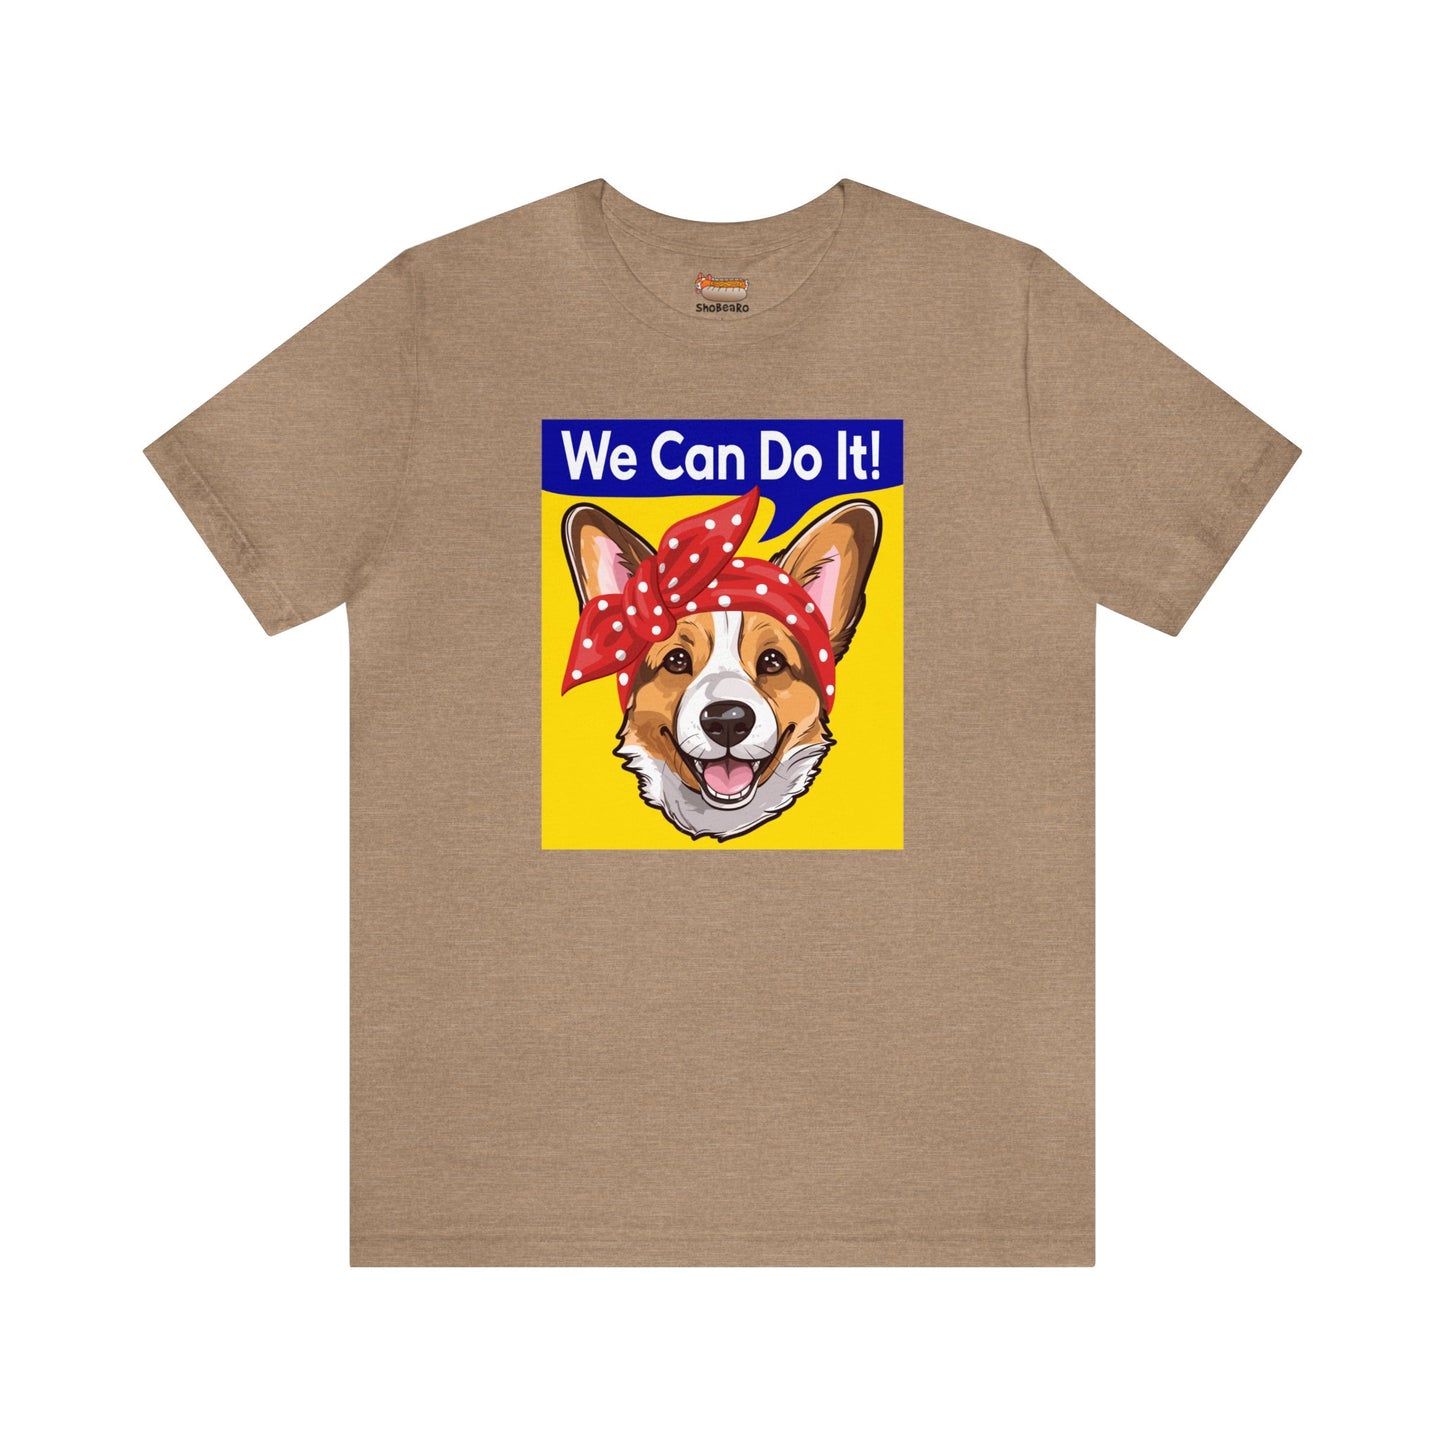 brown tan camel corgi t-shirt rosie the riveter women's rights shirt gift for her dog lover